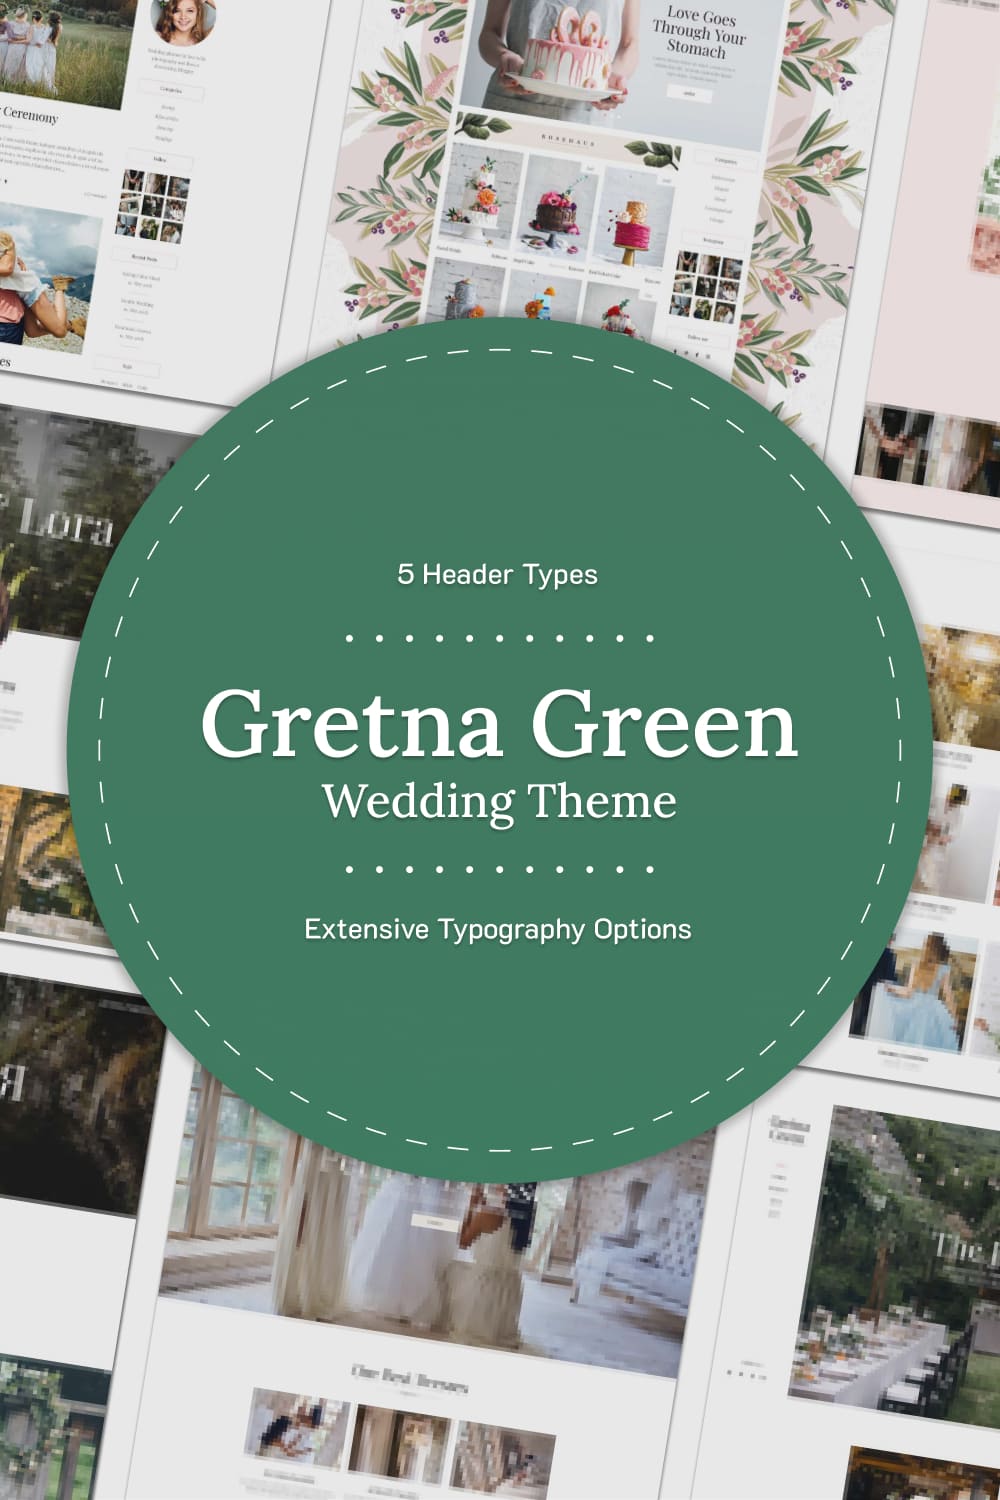 Gretna green wedding theme.